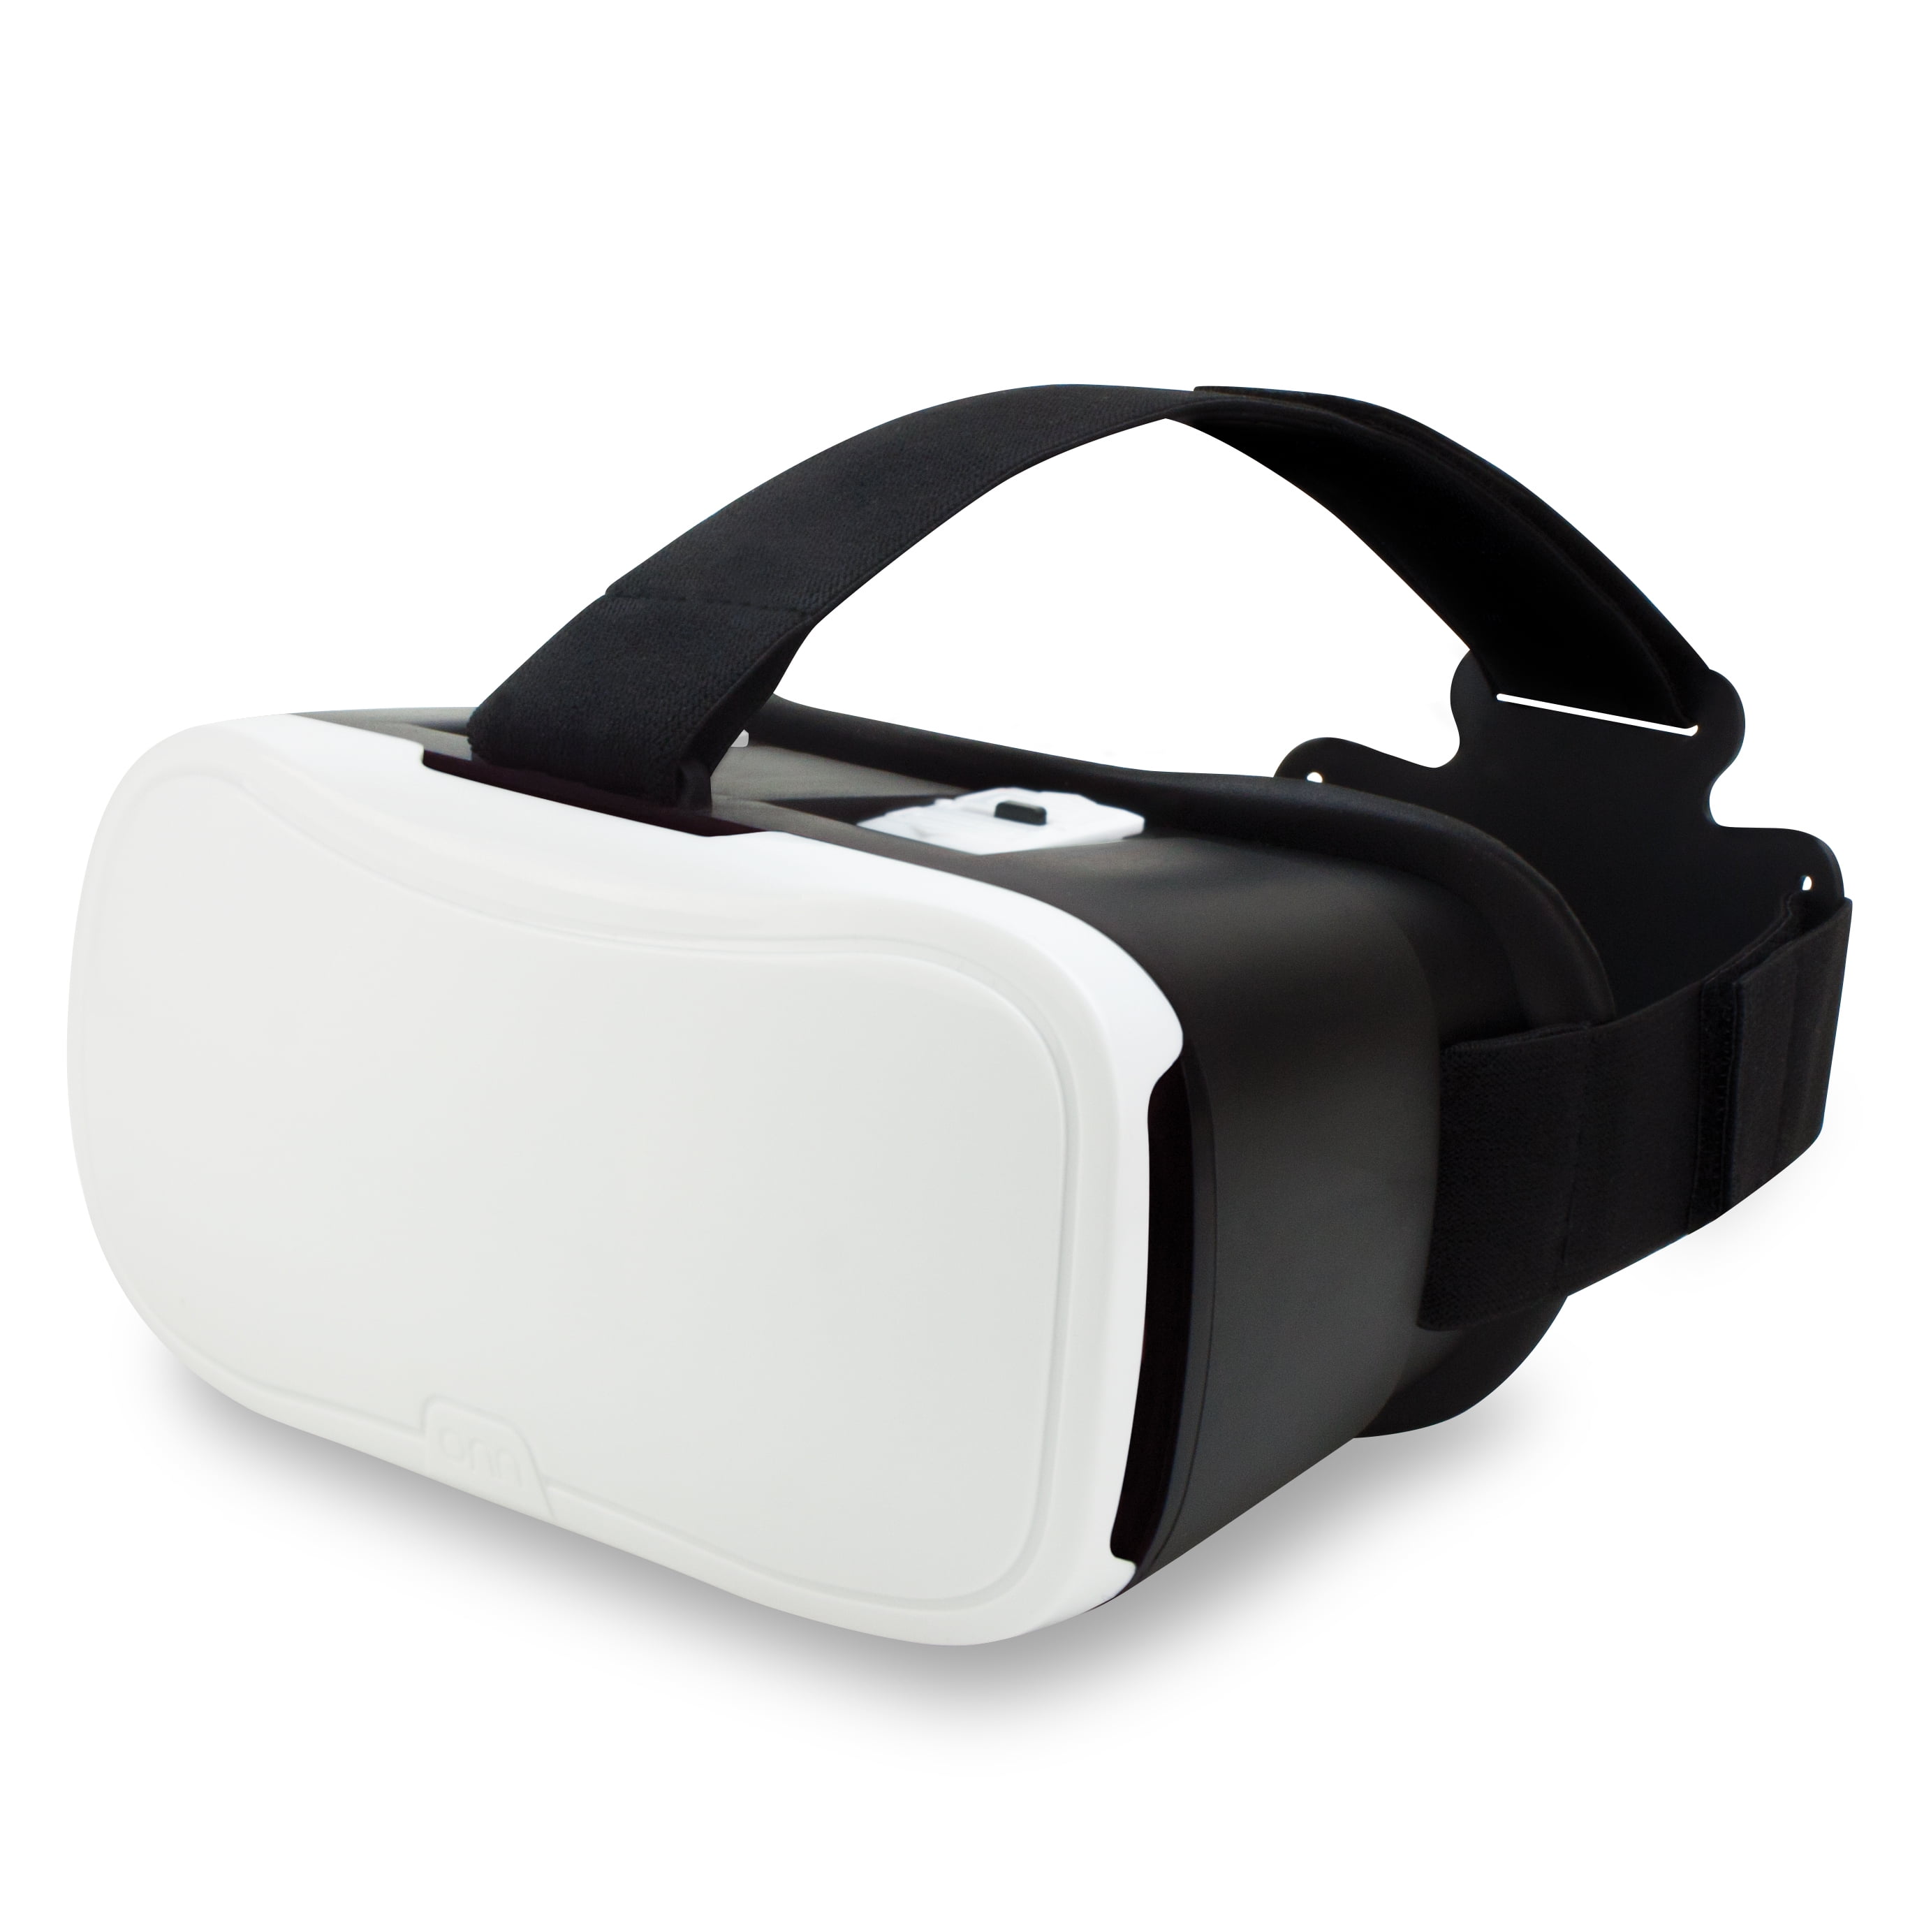 Onn Virtual Reality Headset White Walmart Com Walmart Com